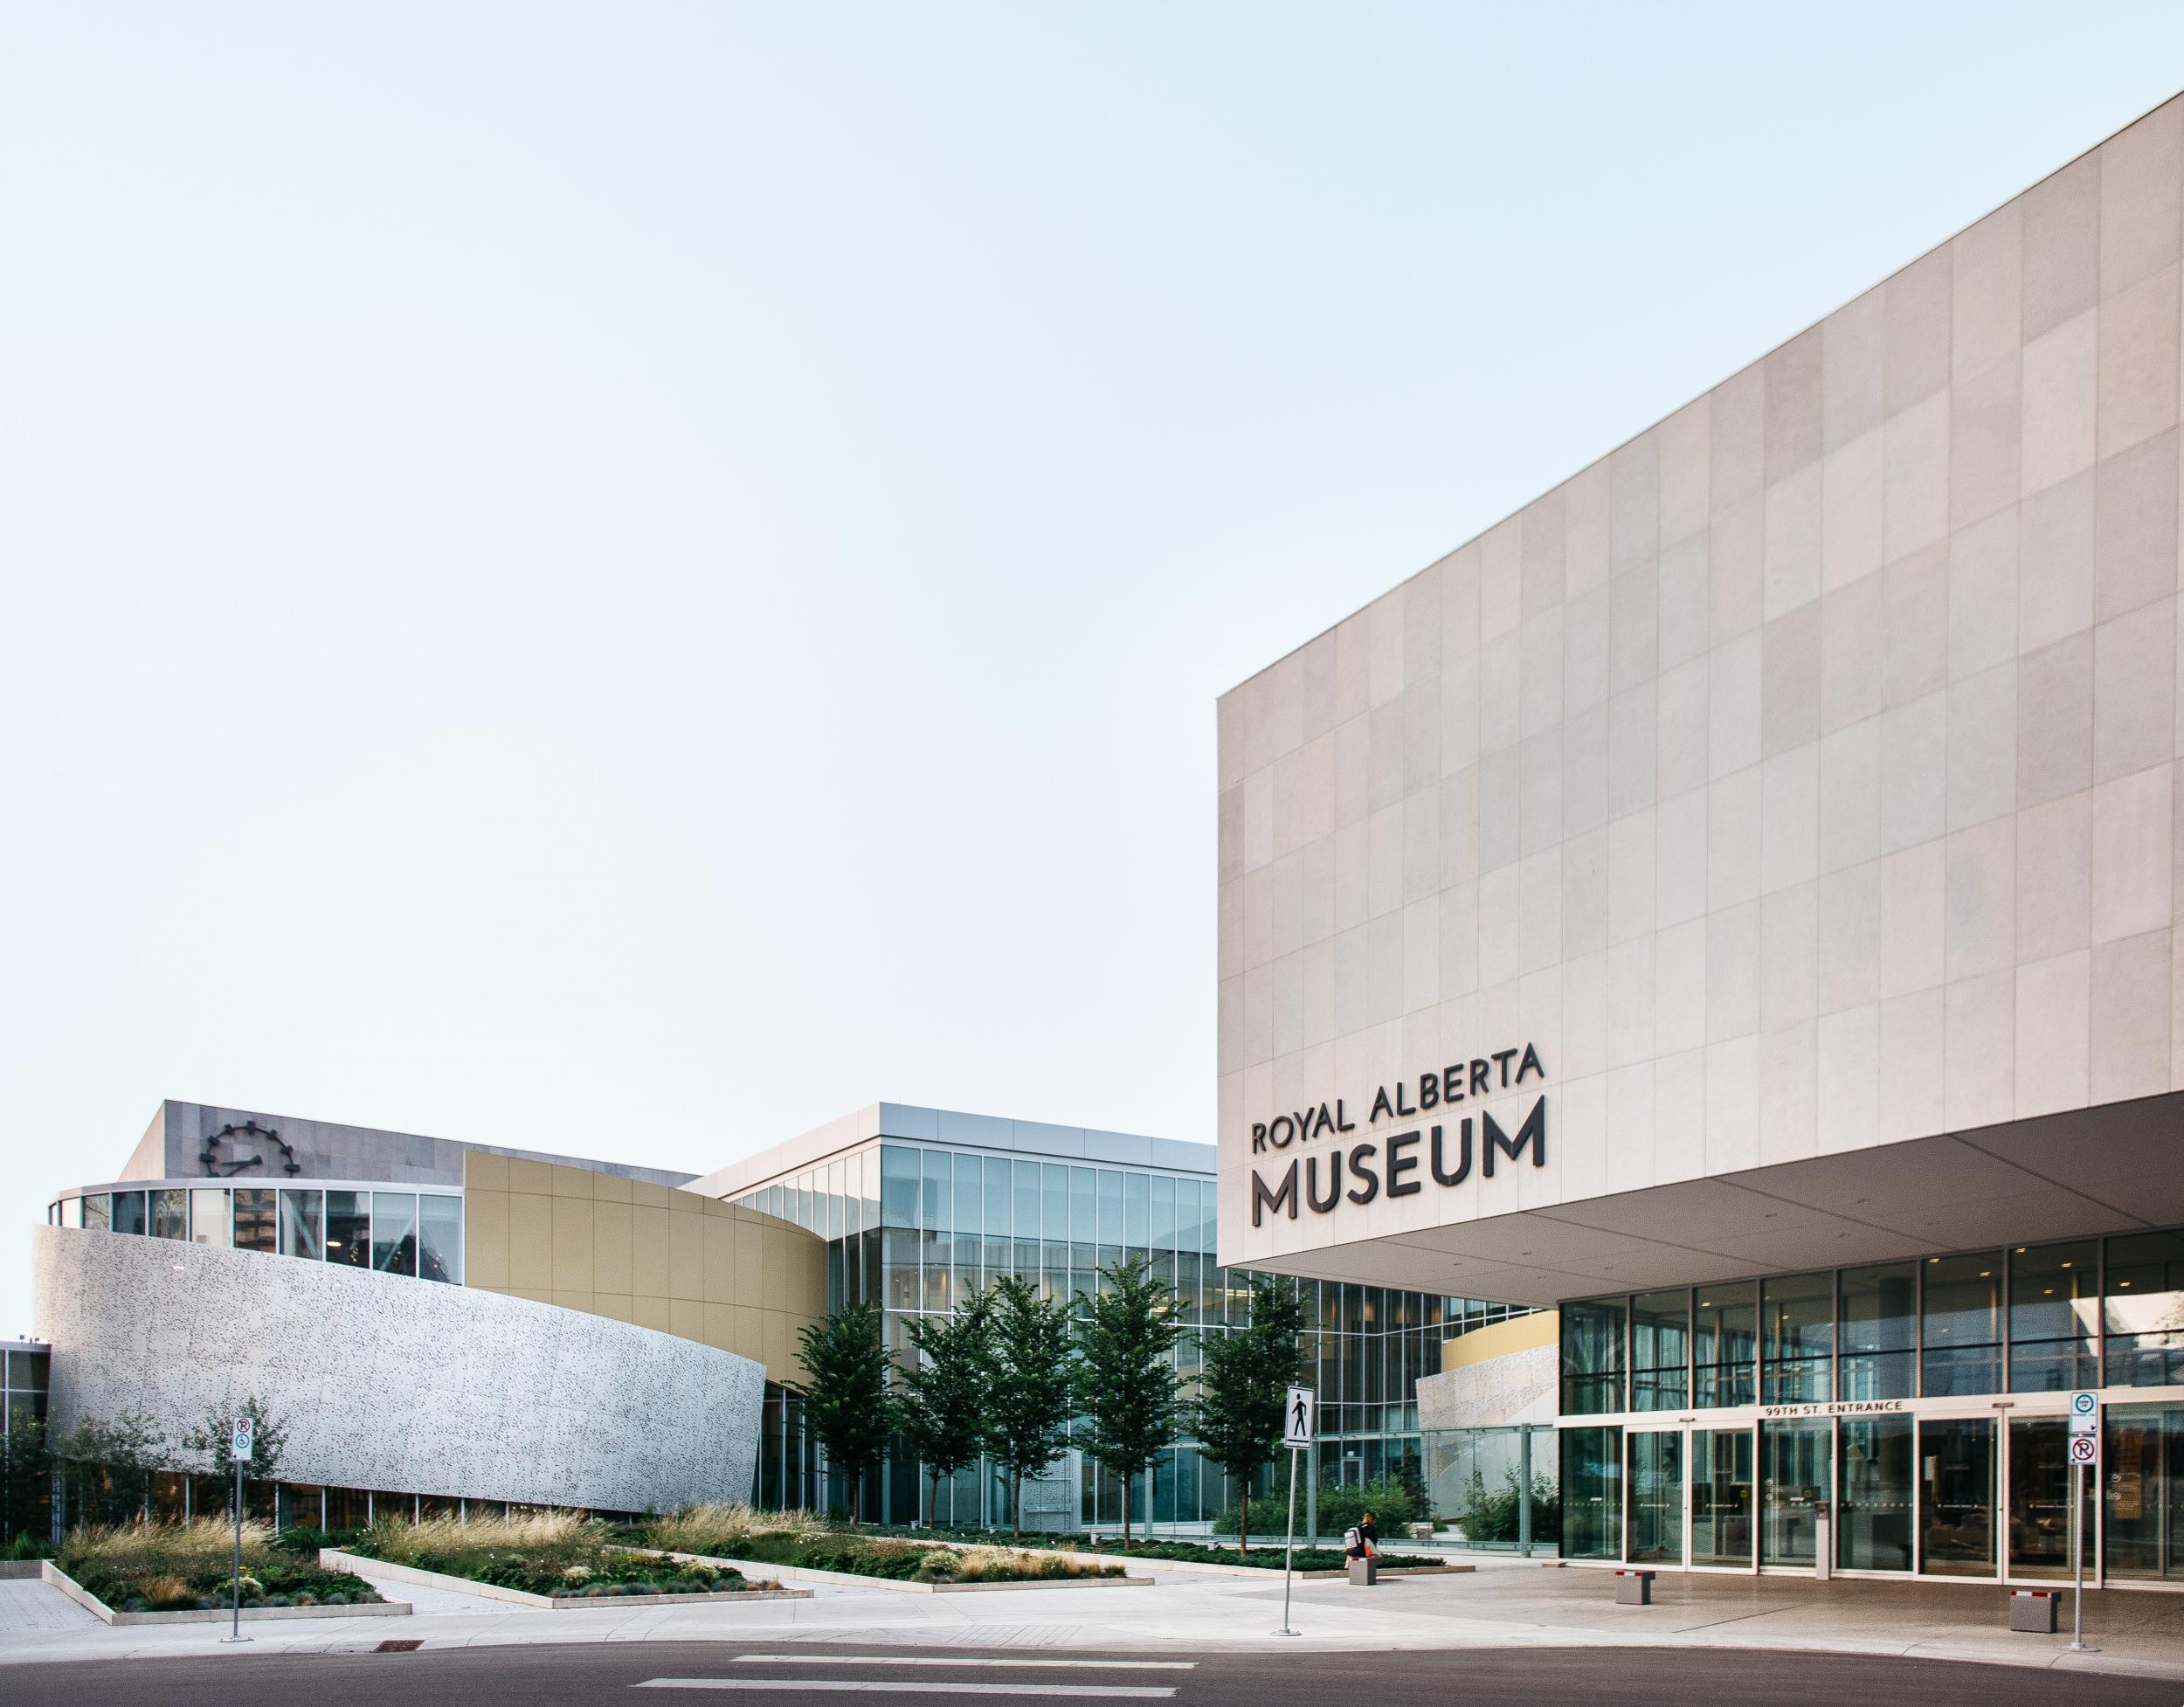 Edmonton’s Royal Alberta Museum reopened last year